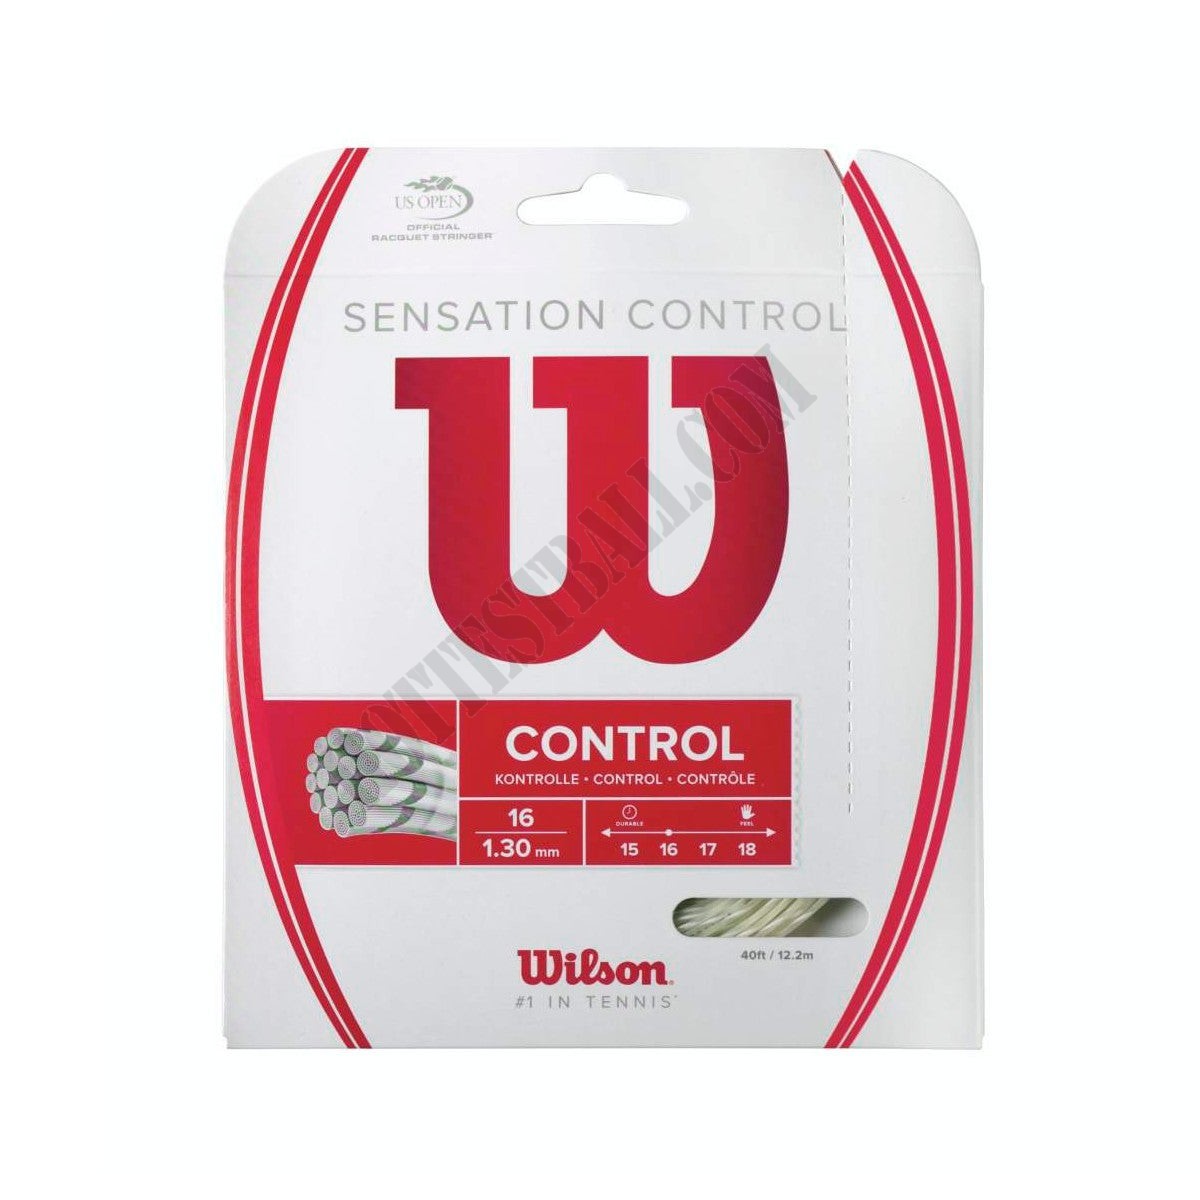 Sensation Control Tennis String Set - Natural, 16 GA (1.30mm) - Wilson Discount Store - -0